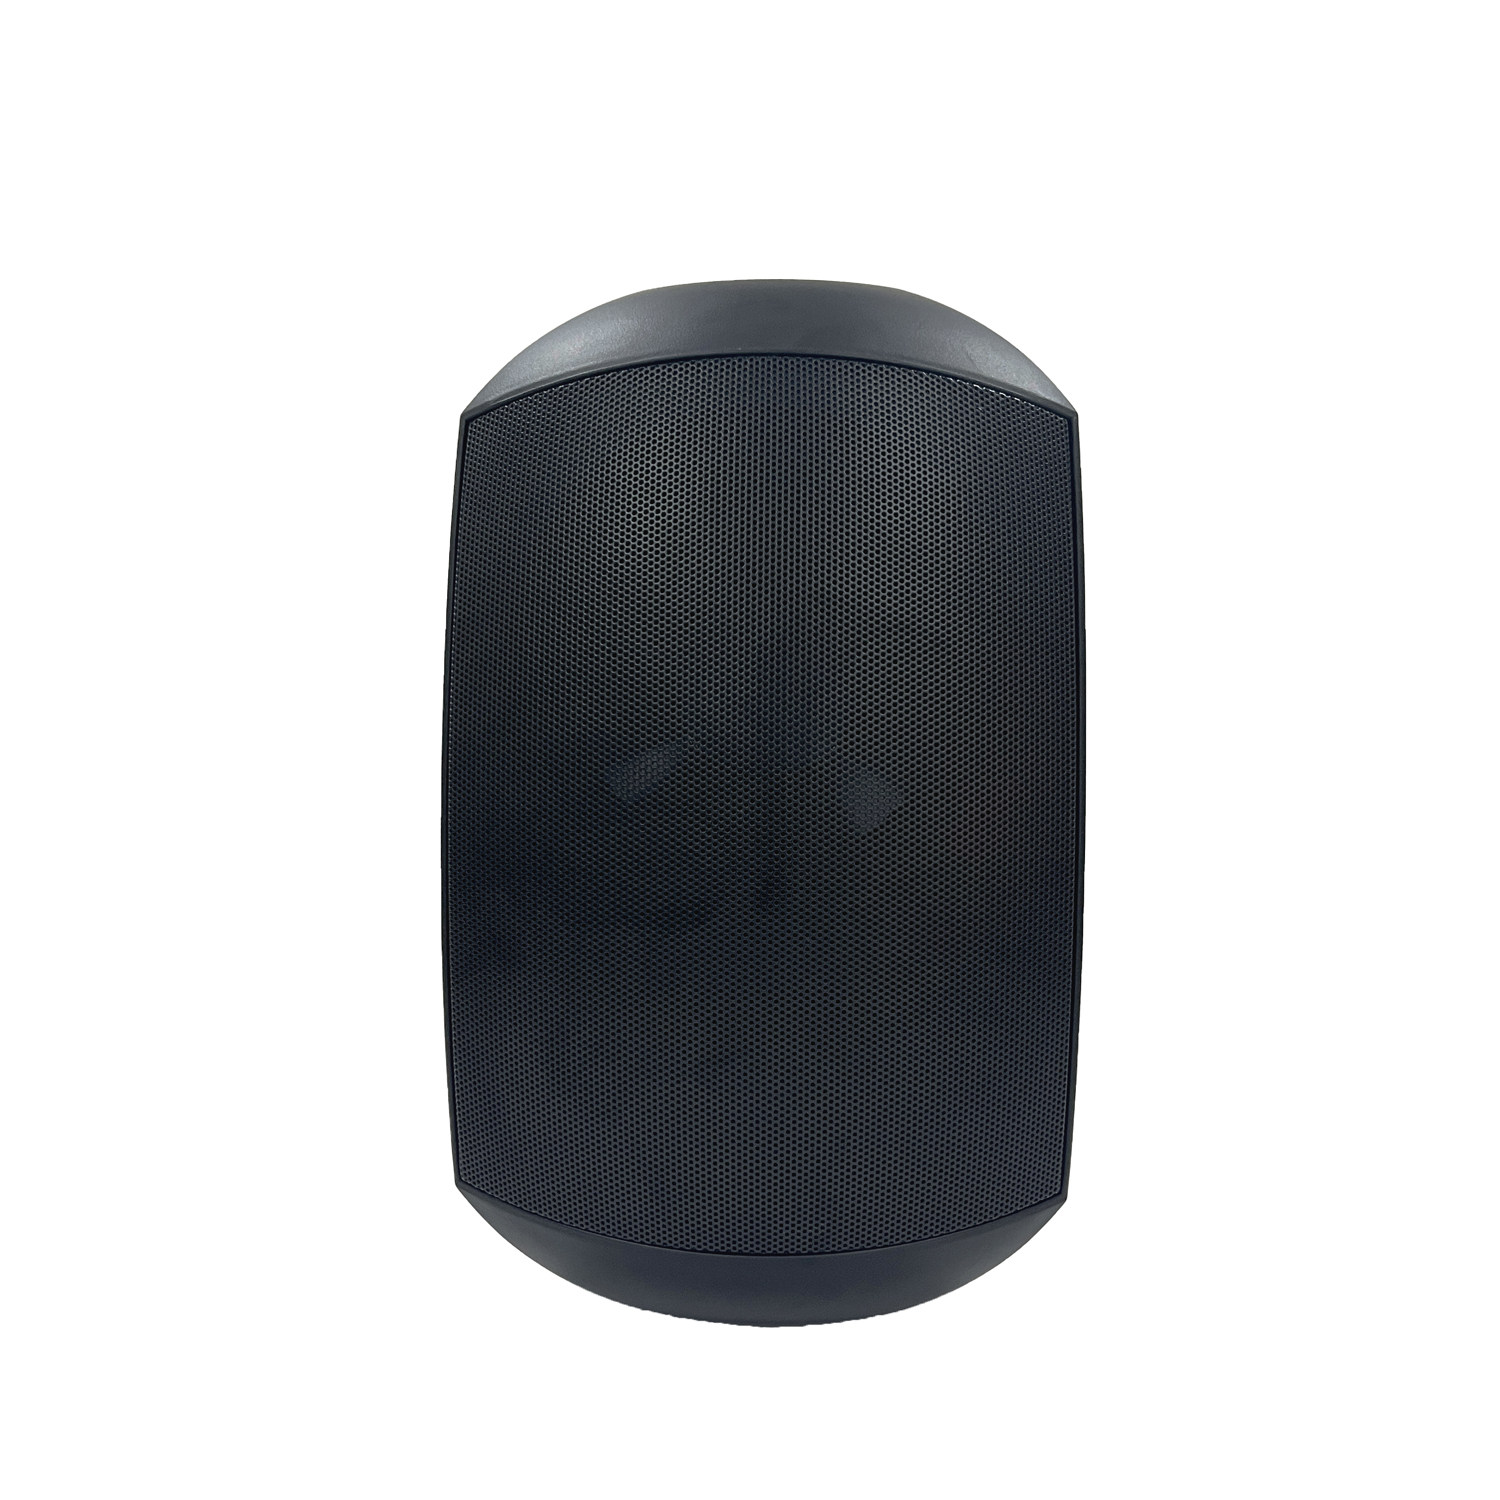 FWS-620 4.5 inch outdoor Wall Mount Speaker